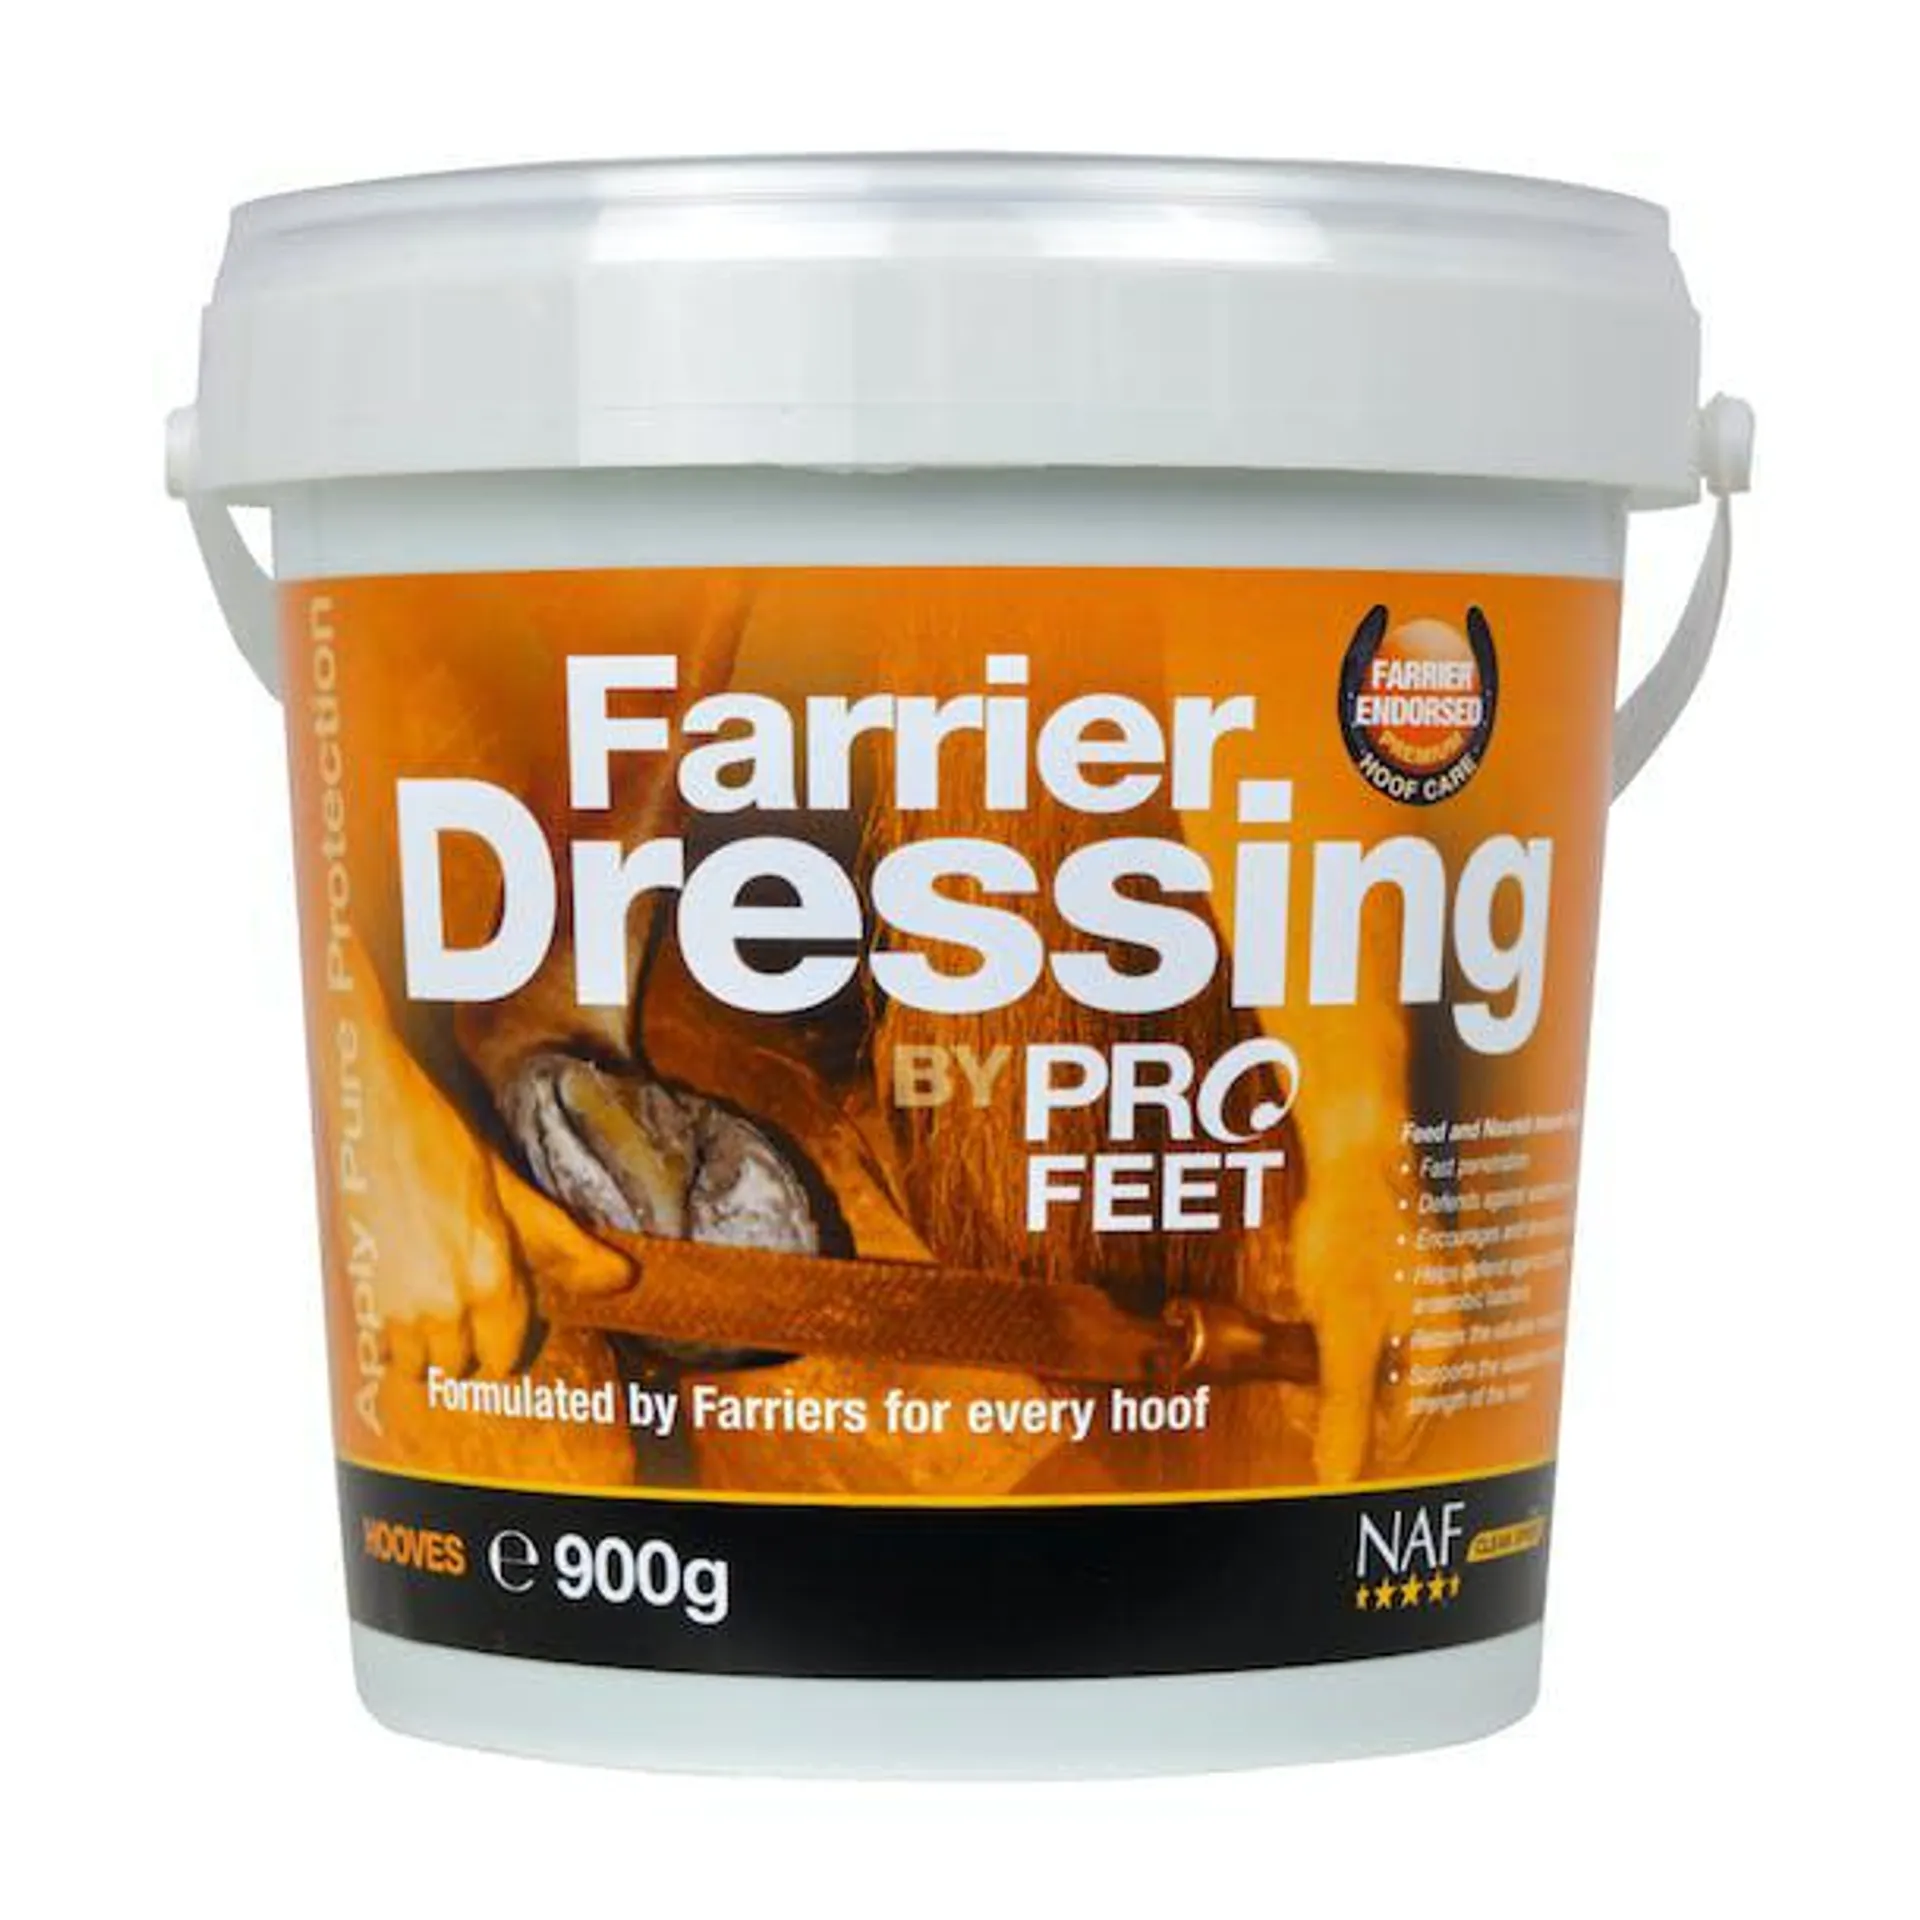 NAF Farrier Dressing by Pro Feet Hoof Care